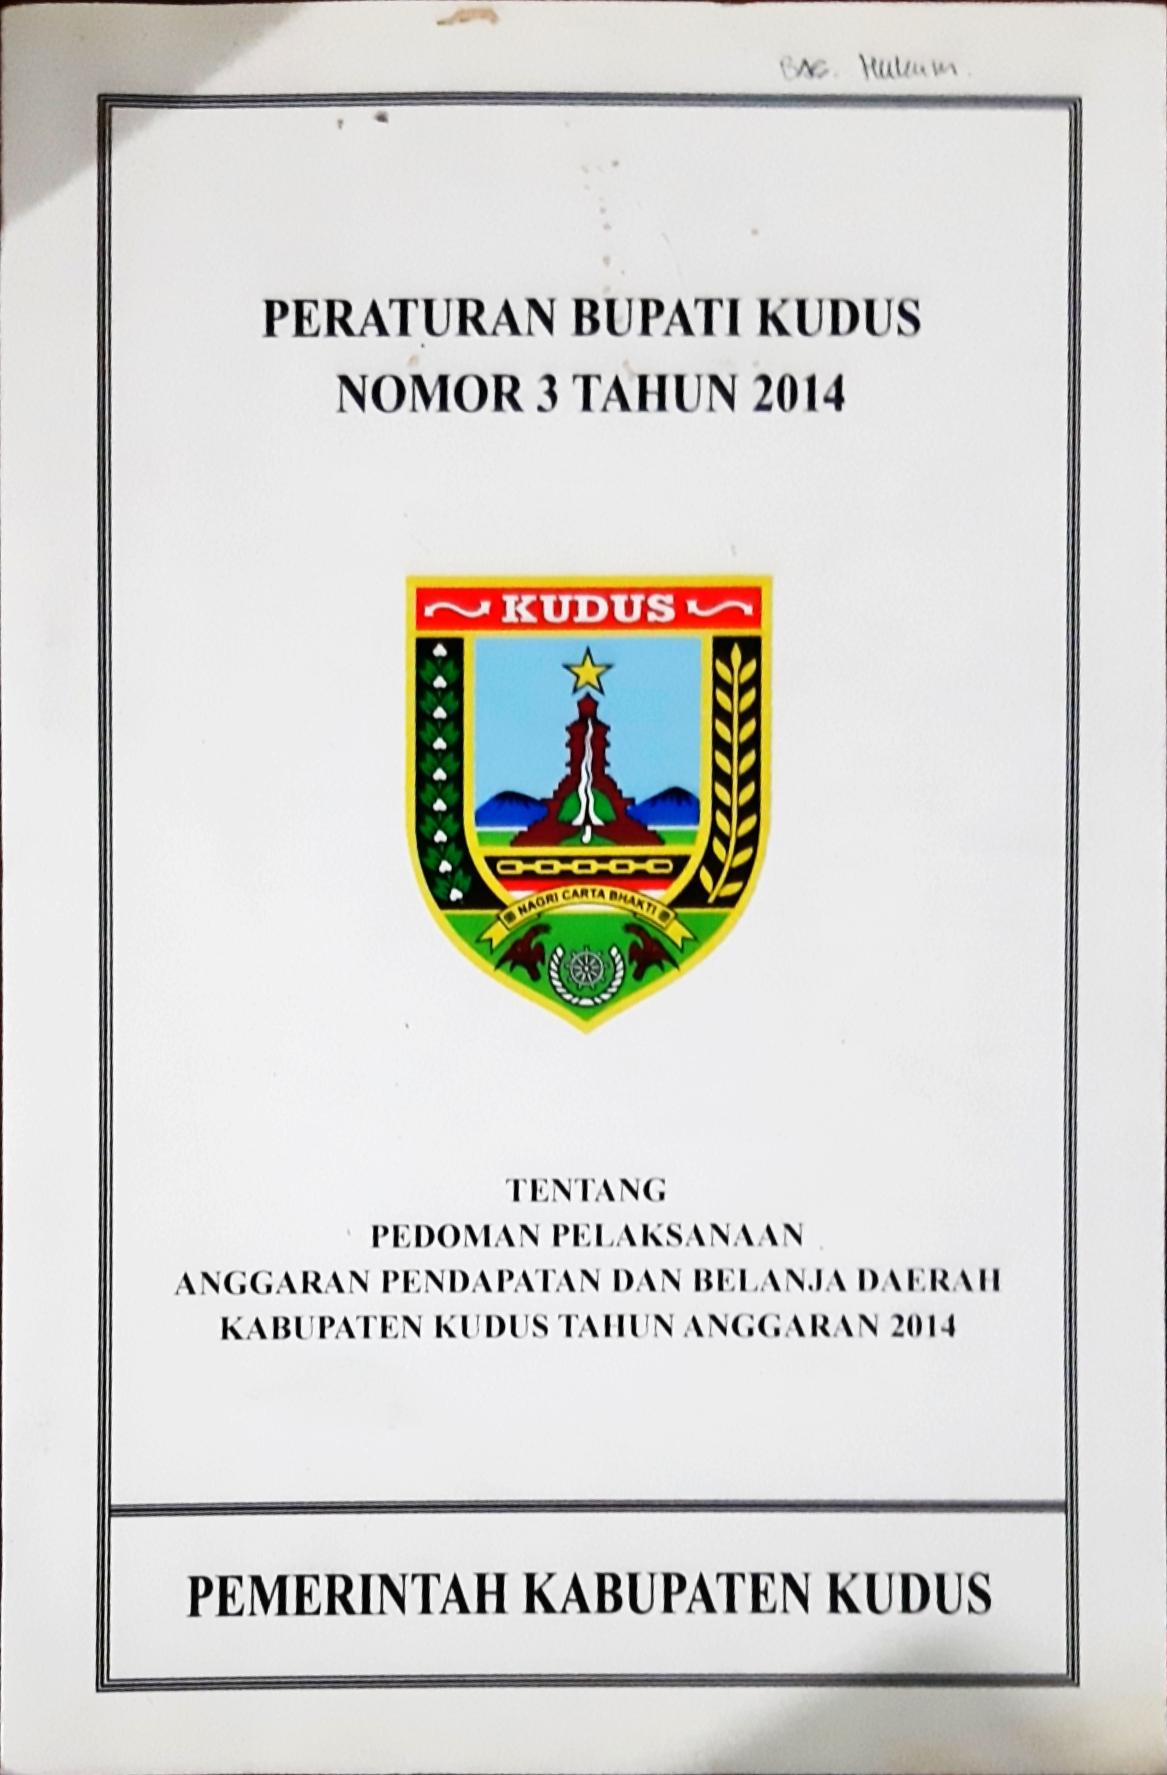 Peraturan Bupati Kudus Nomor 3 Tahun 2014 Tentang Pedoman Pelaksanaan Anggaran Pendapatan dan Belanja Daerah Kabupaten Kudus Tahun Anggaran 2014